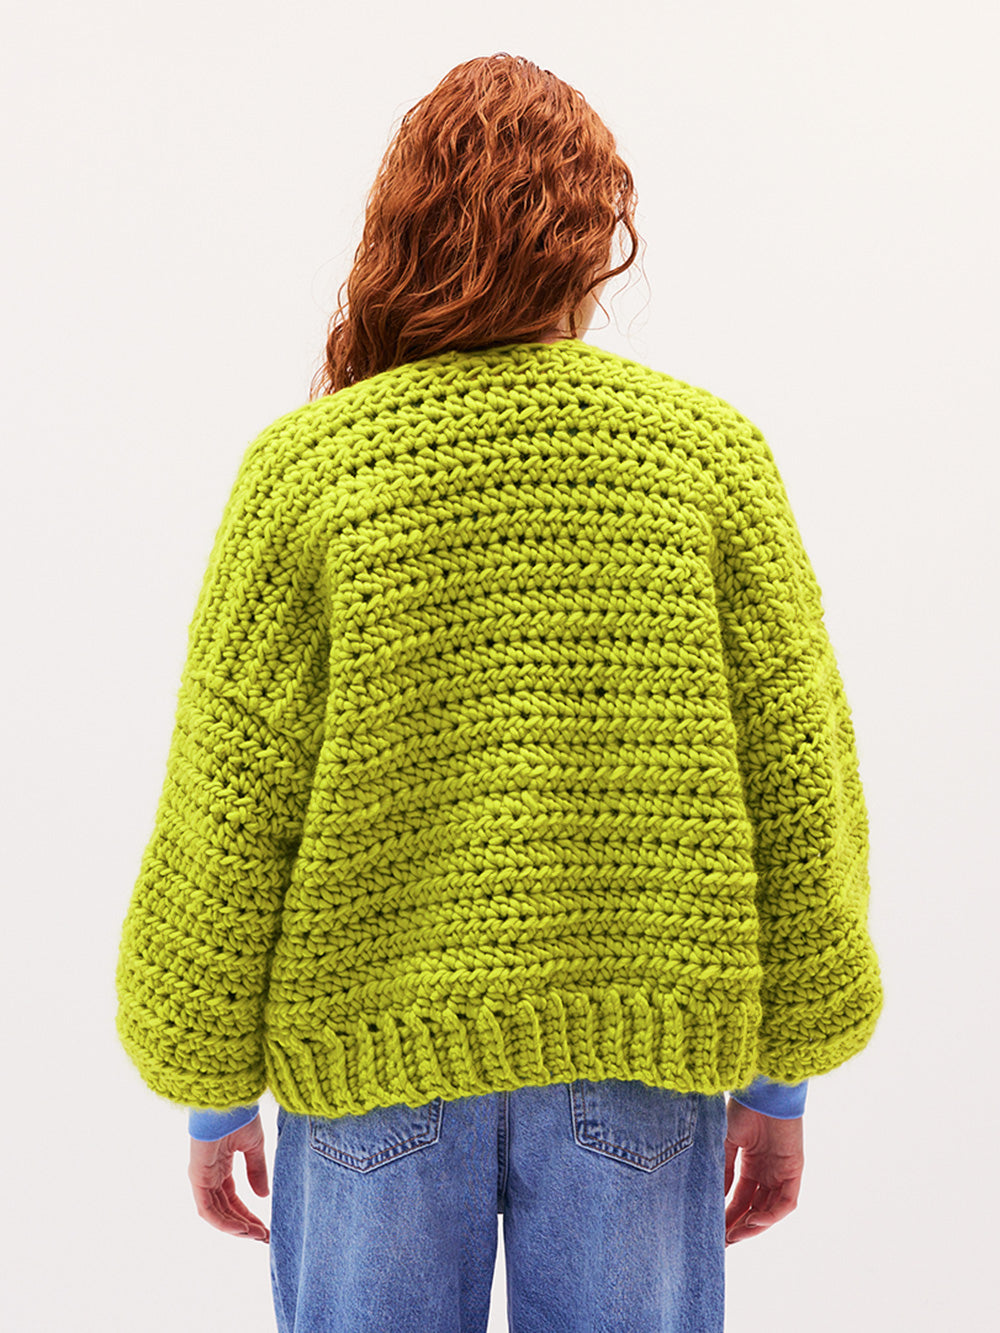 Clare Cardigan Crochet Kit